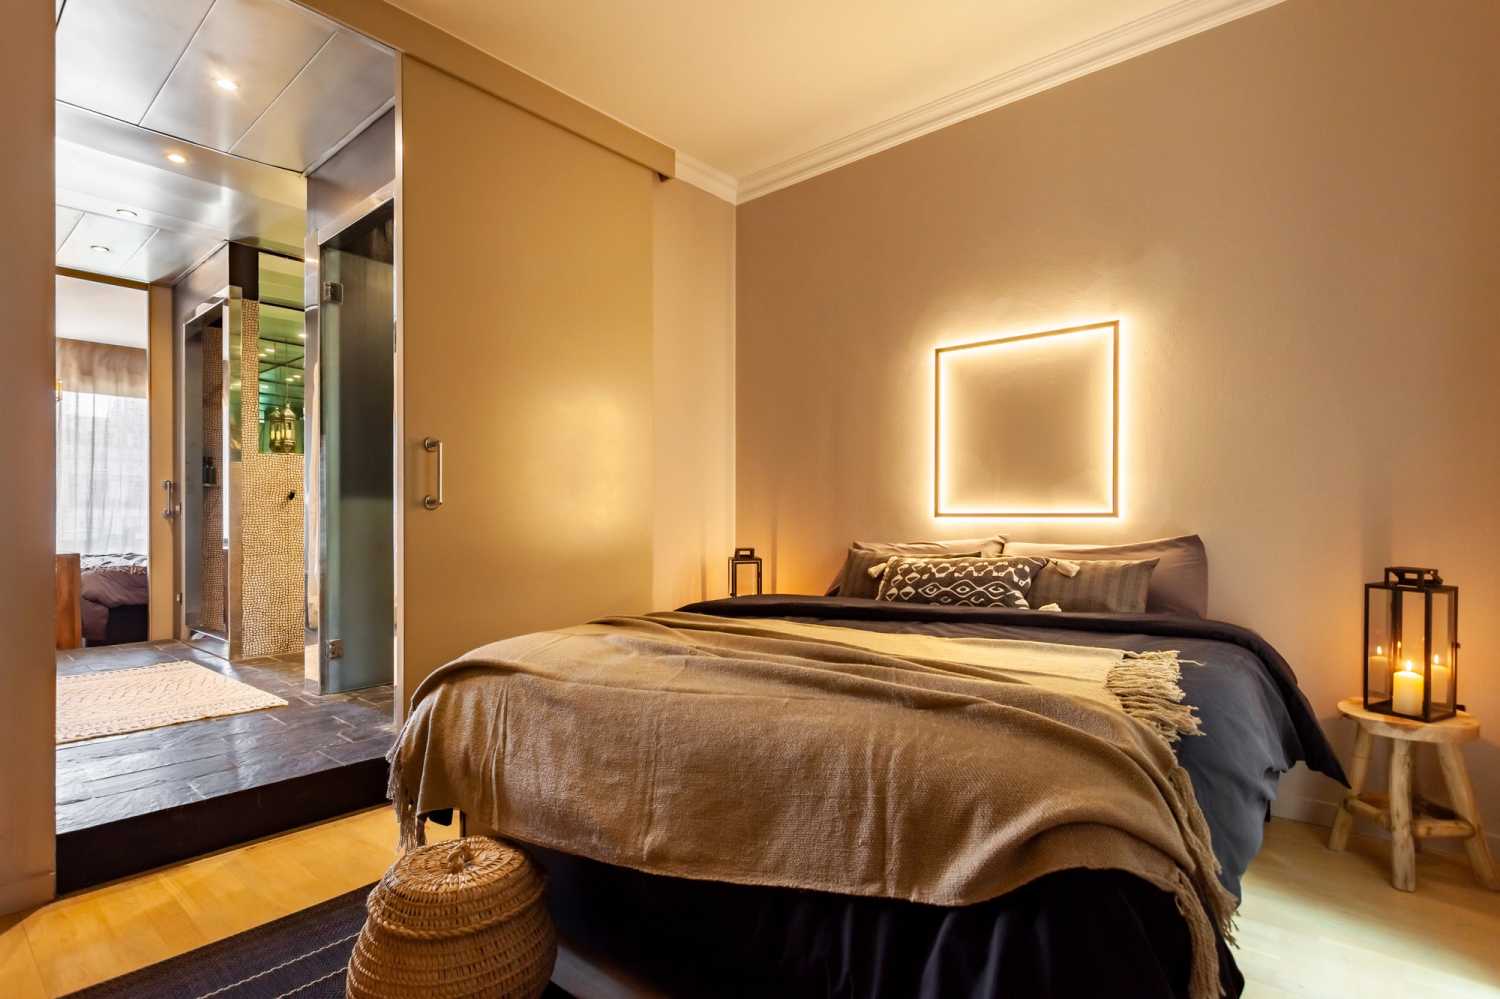 1654088526-colors-bedroom-double-bed-barcelona-passeig-de-gracia.jpg